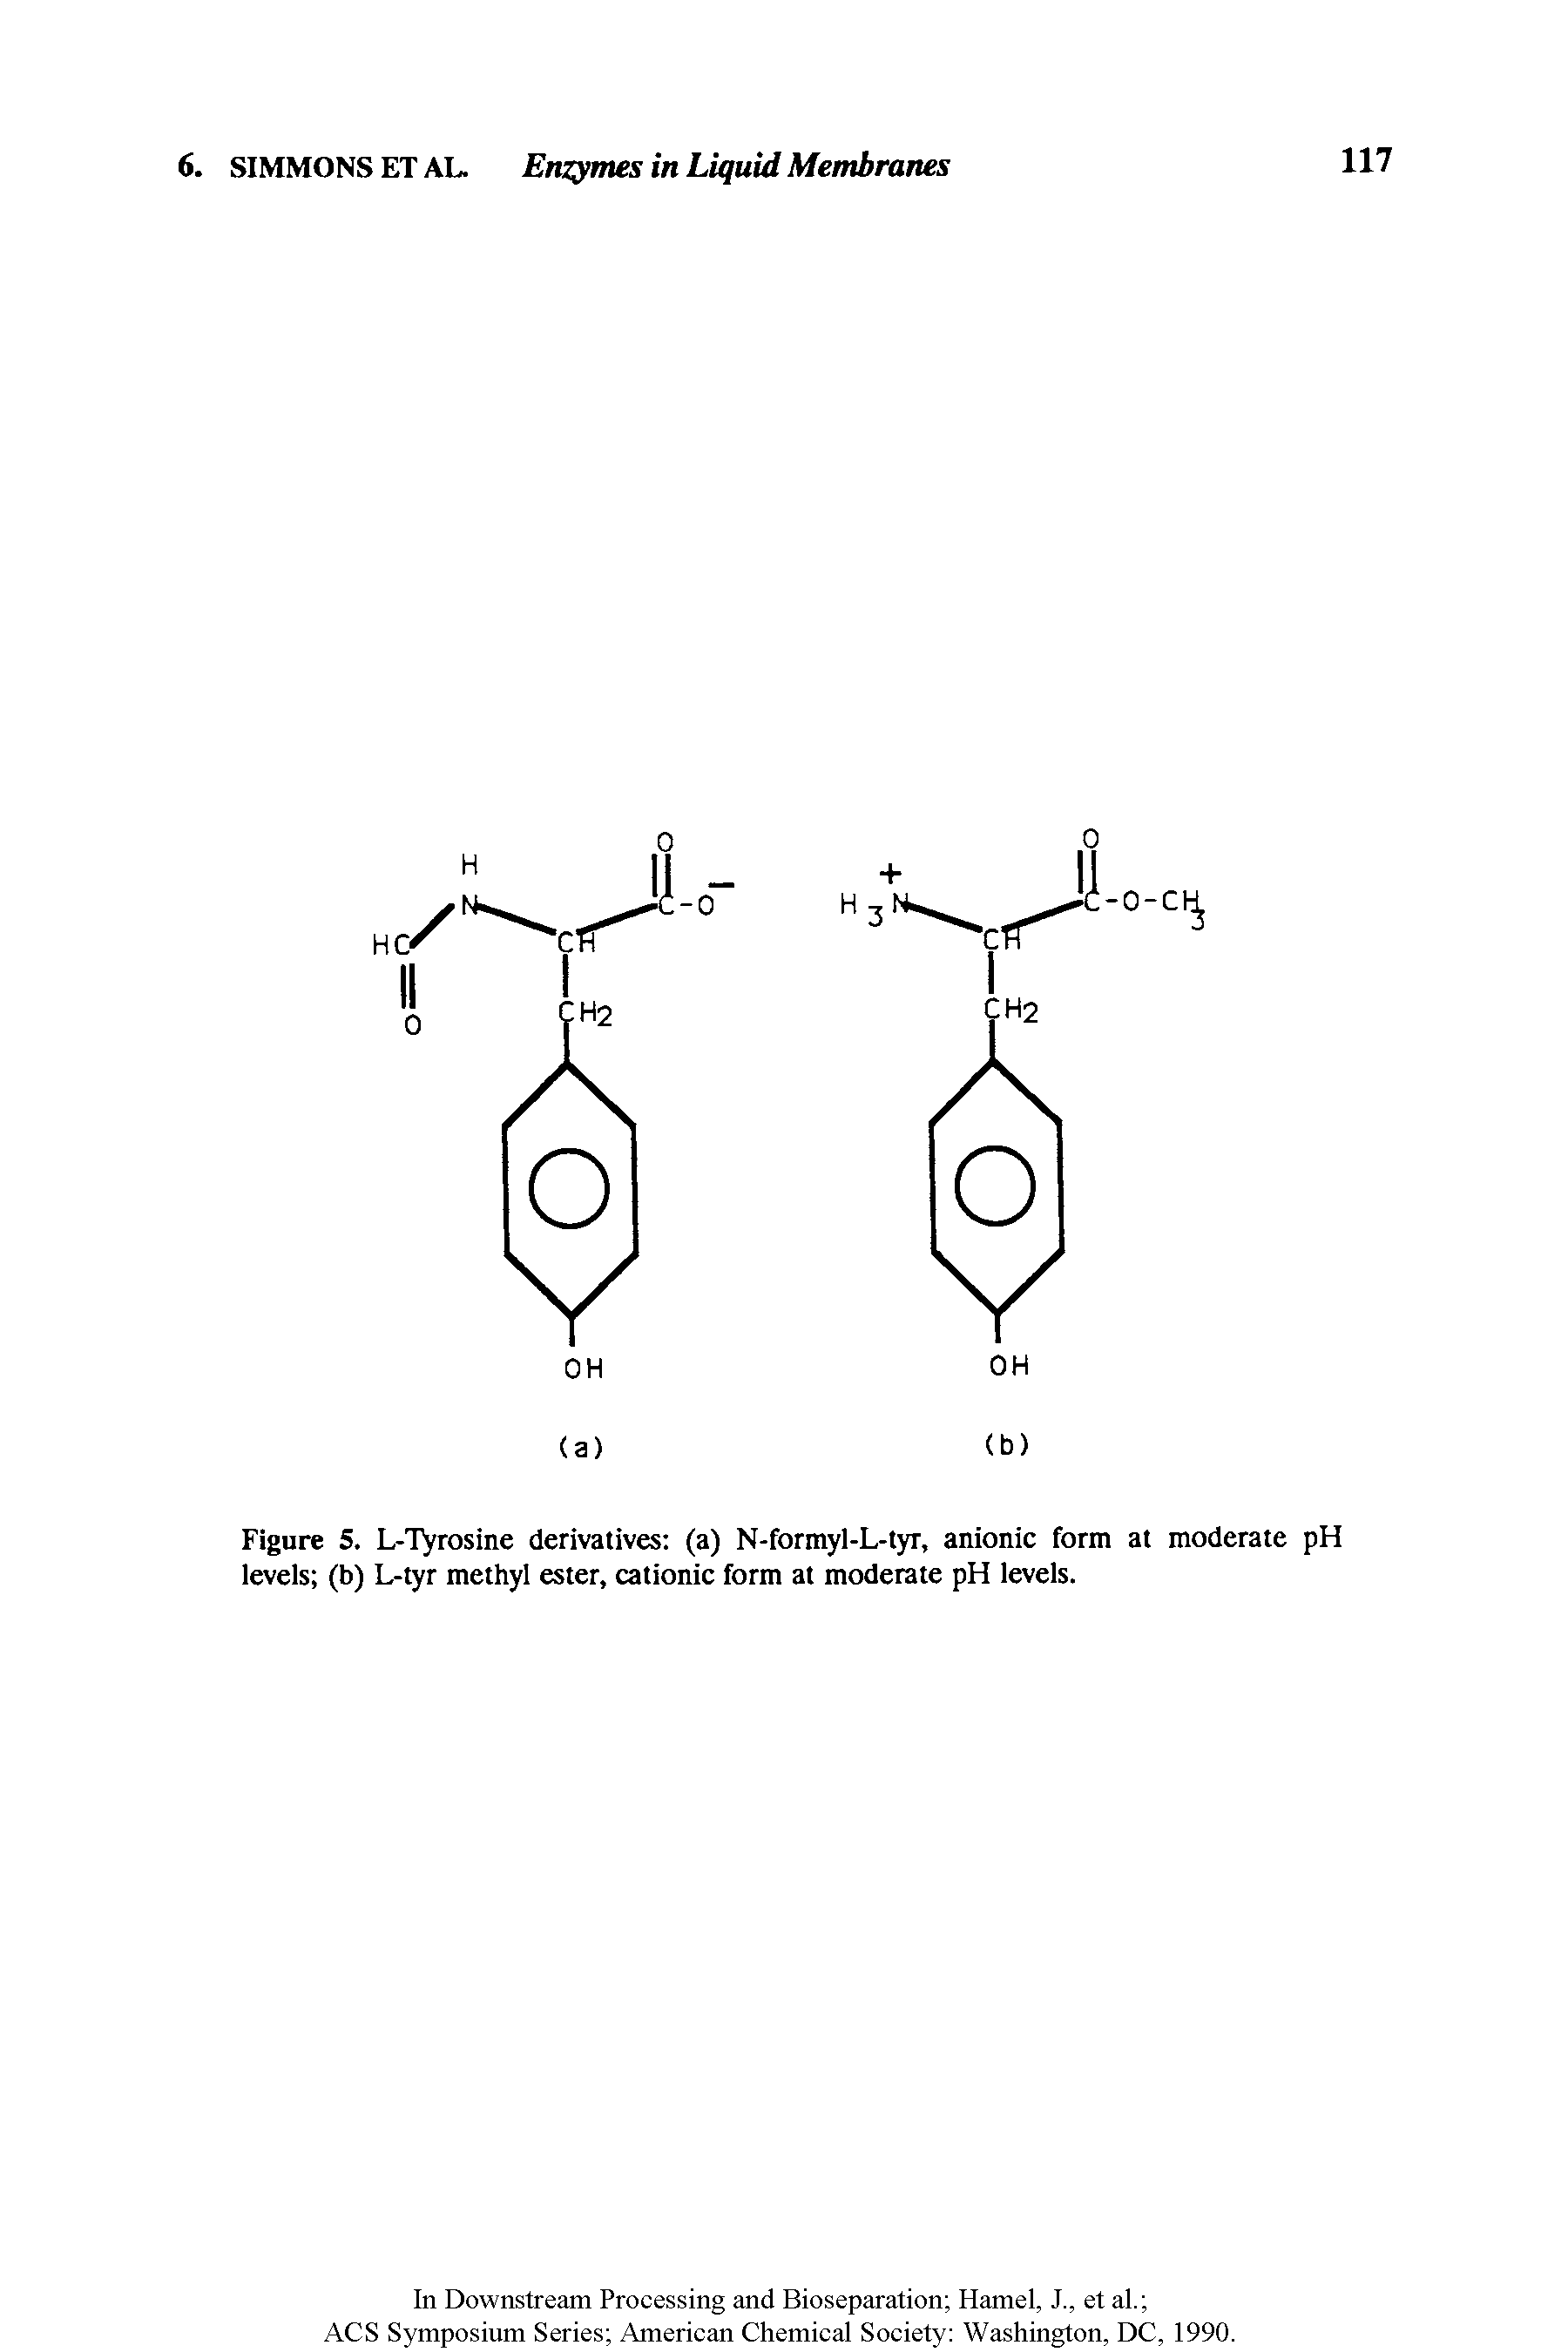 Figure 5. L-Tyrosine derivatives (a) N-formyl-L-tyr, anionic form at moderate pH levels (b) L-tyr methyl ester, cationic form at moderate pH levels.